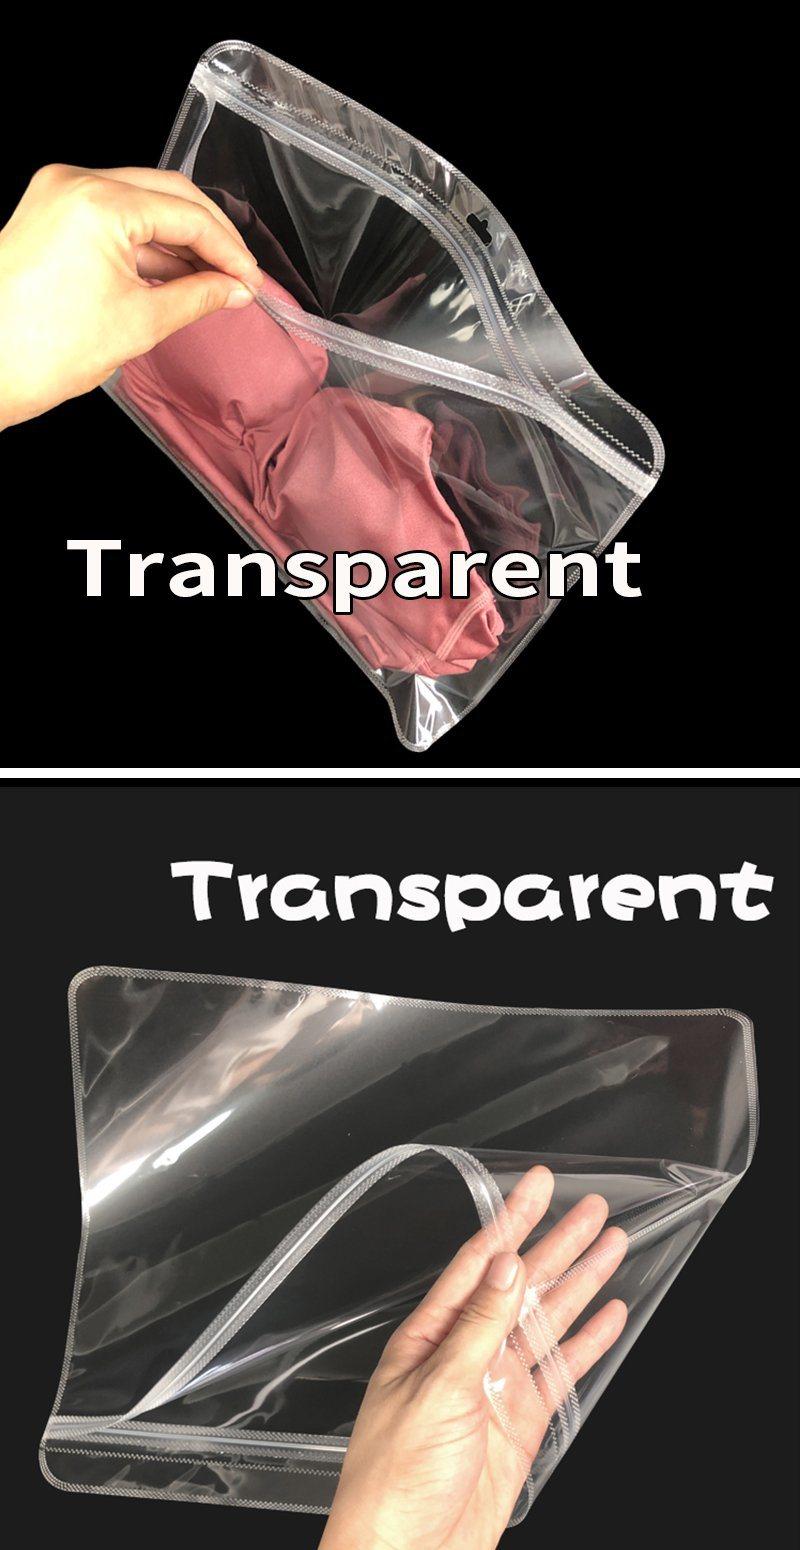 PP Pet Zipper Plastic Packaging Bags for Clothing/Underwear